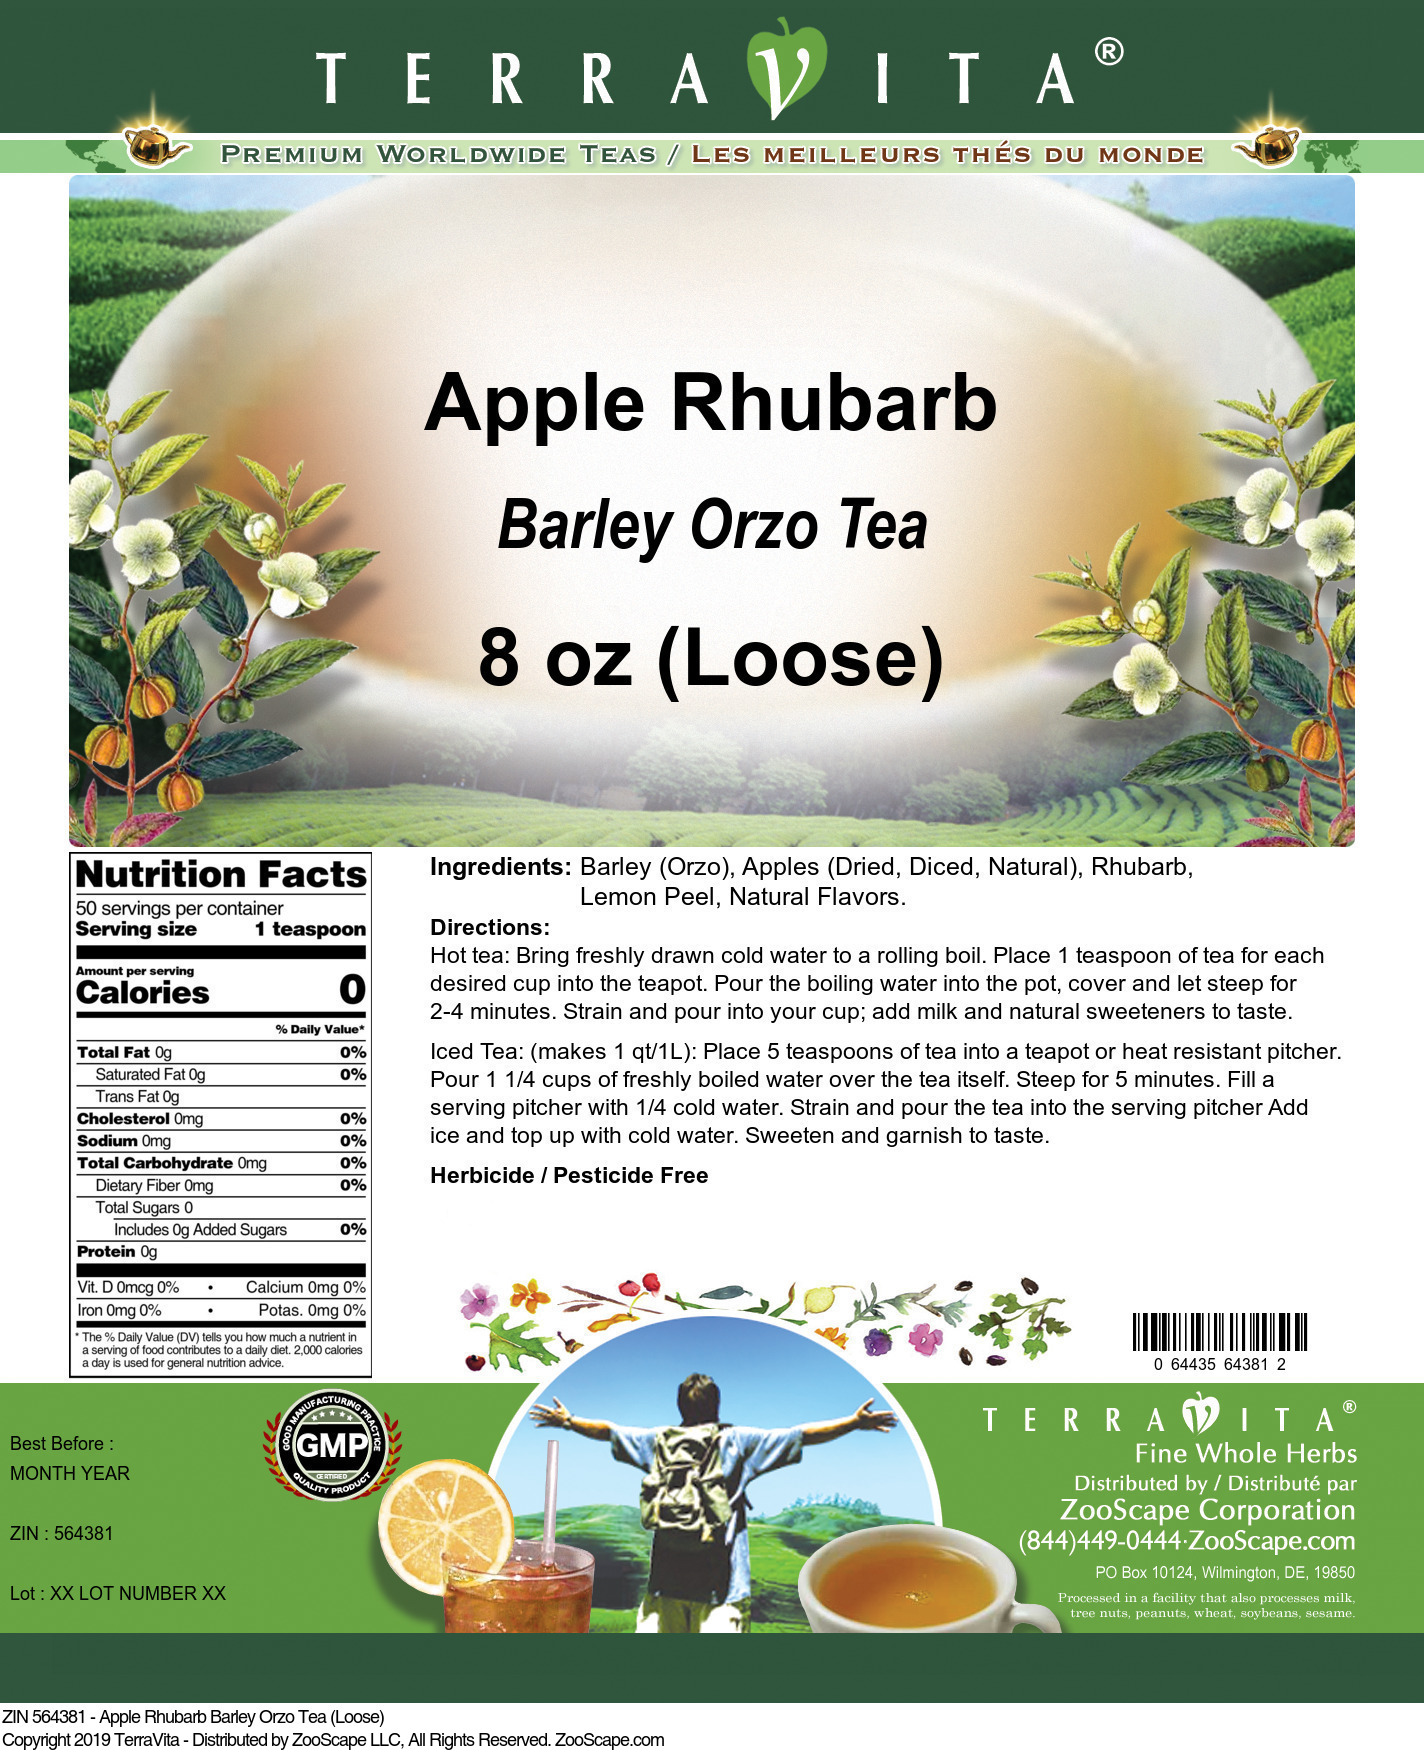 Apple Rhubarb Barley Orzo Tea (Loose) - Label